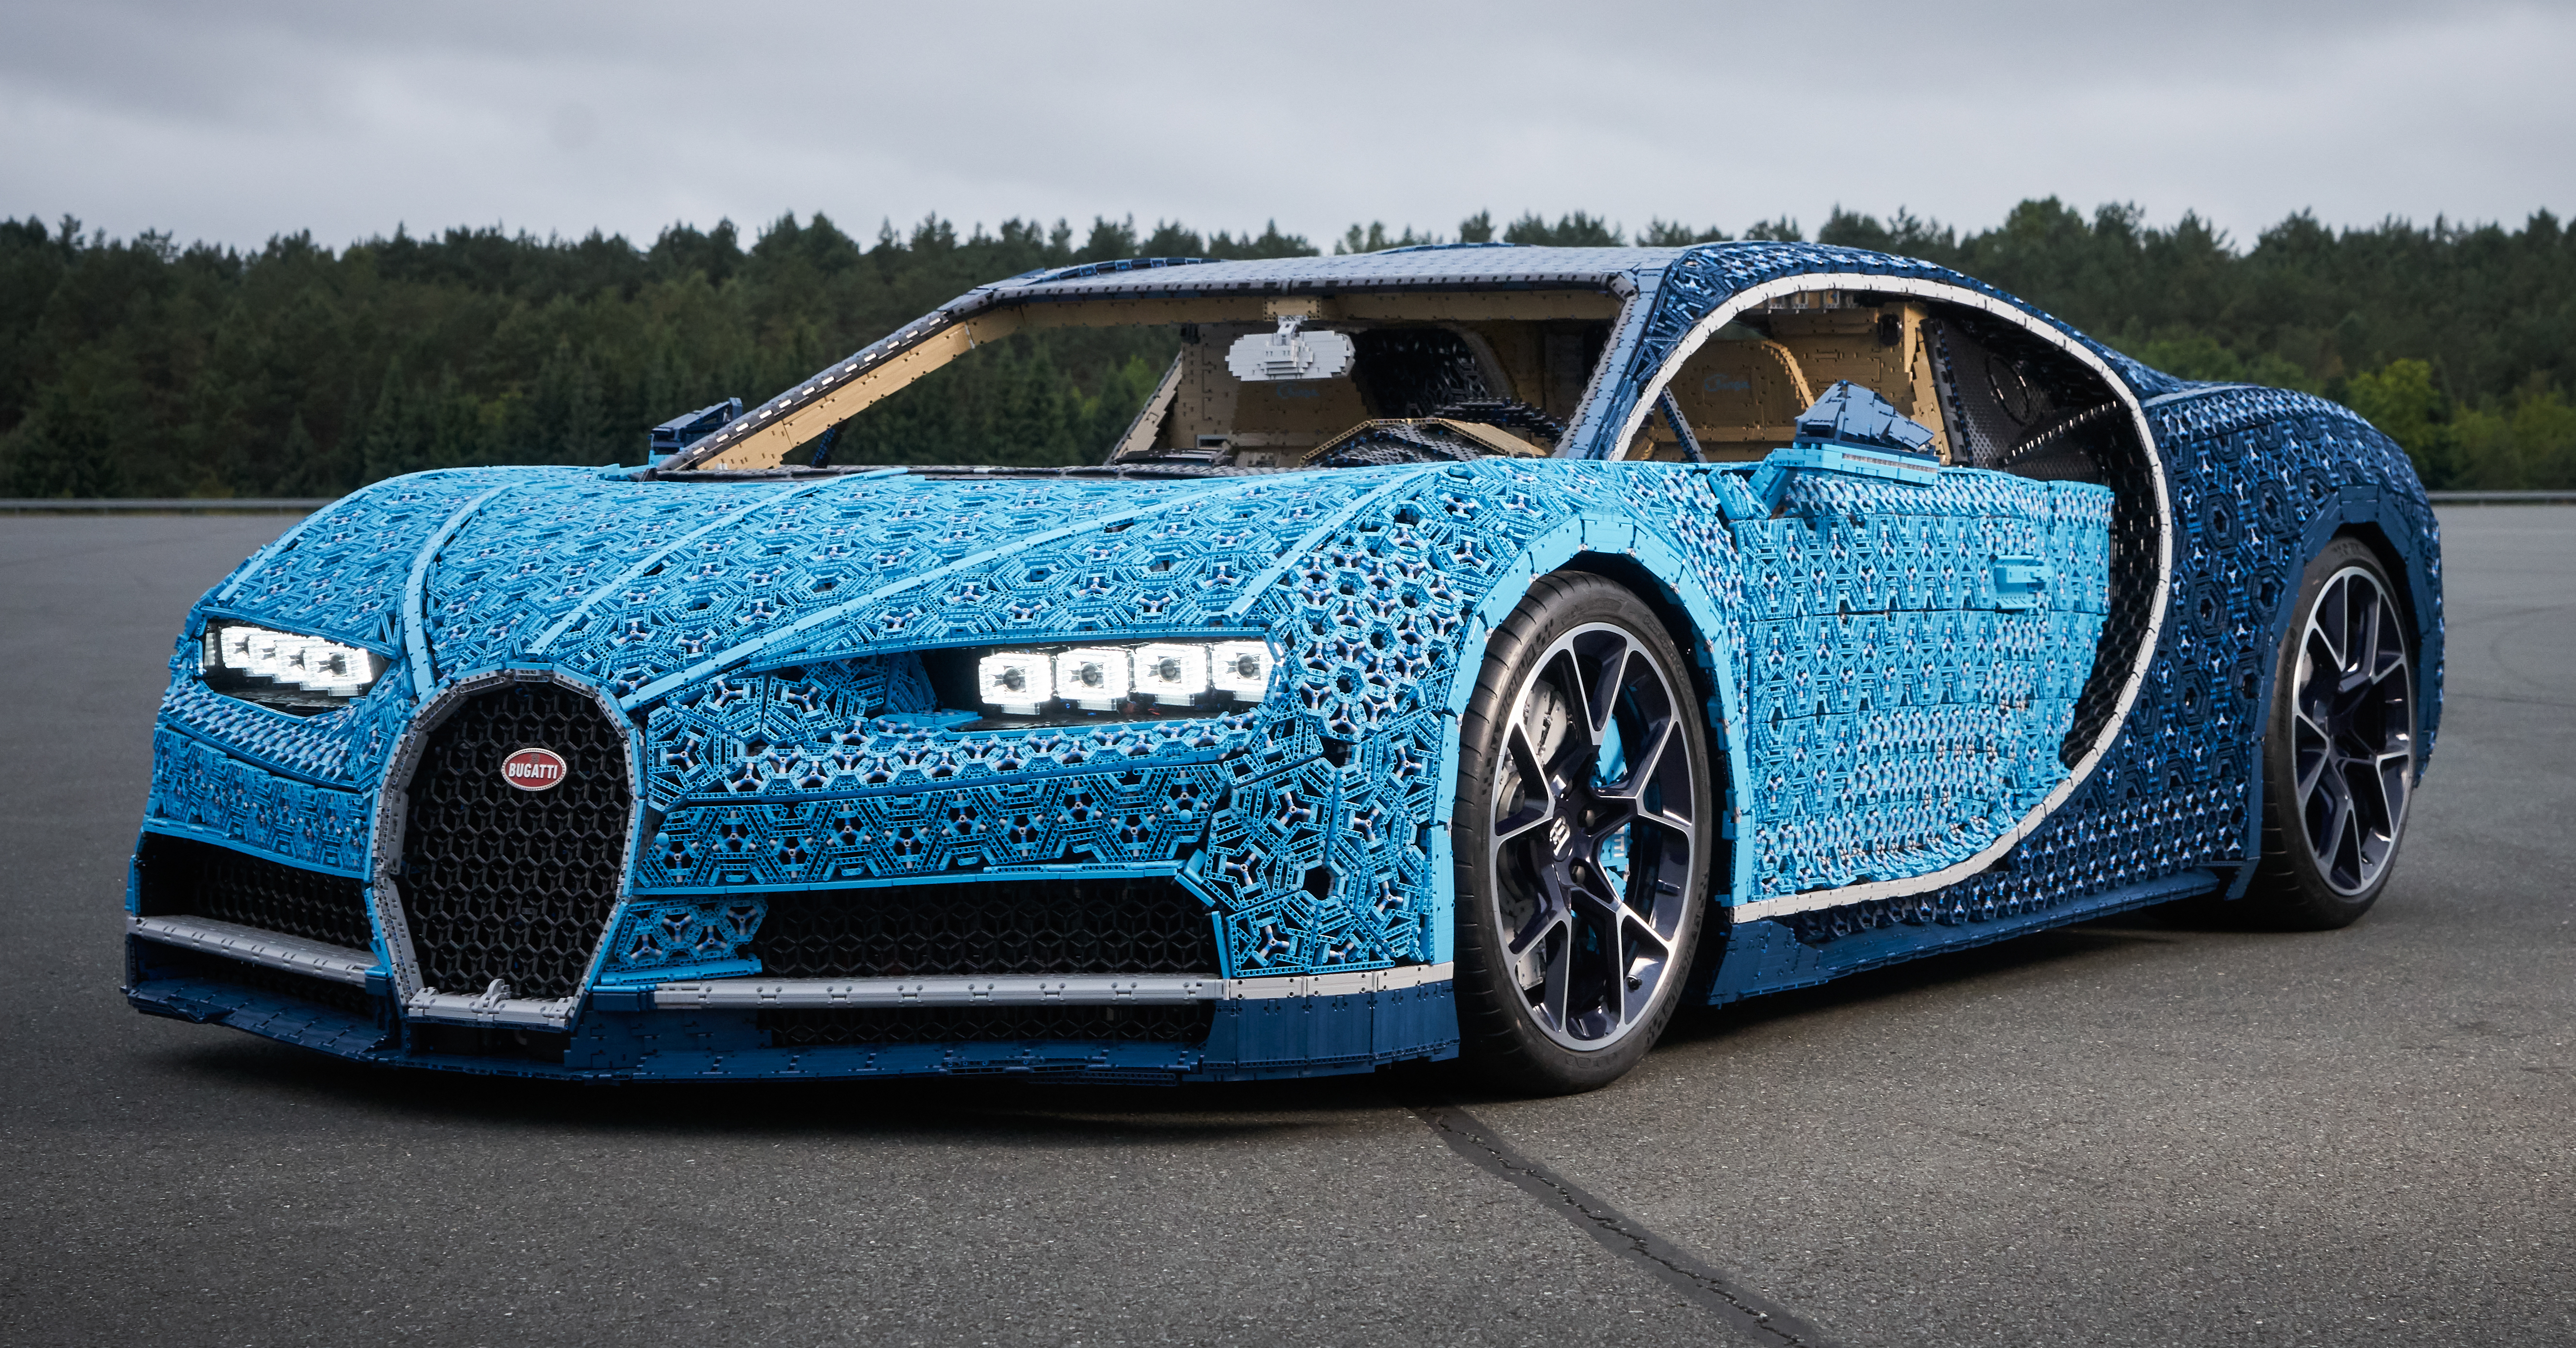 Lego built an epic, life-sized Bugatti 